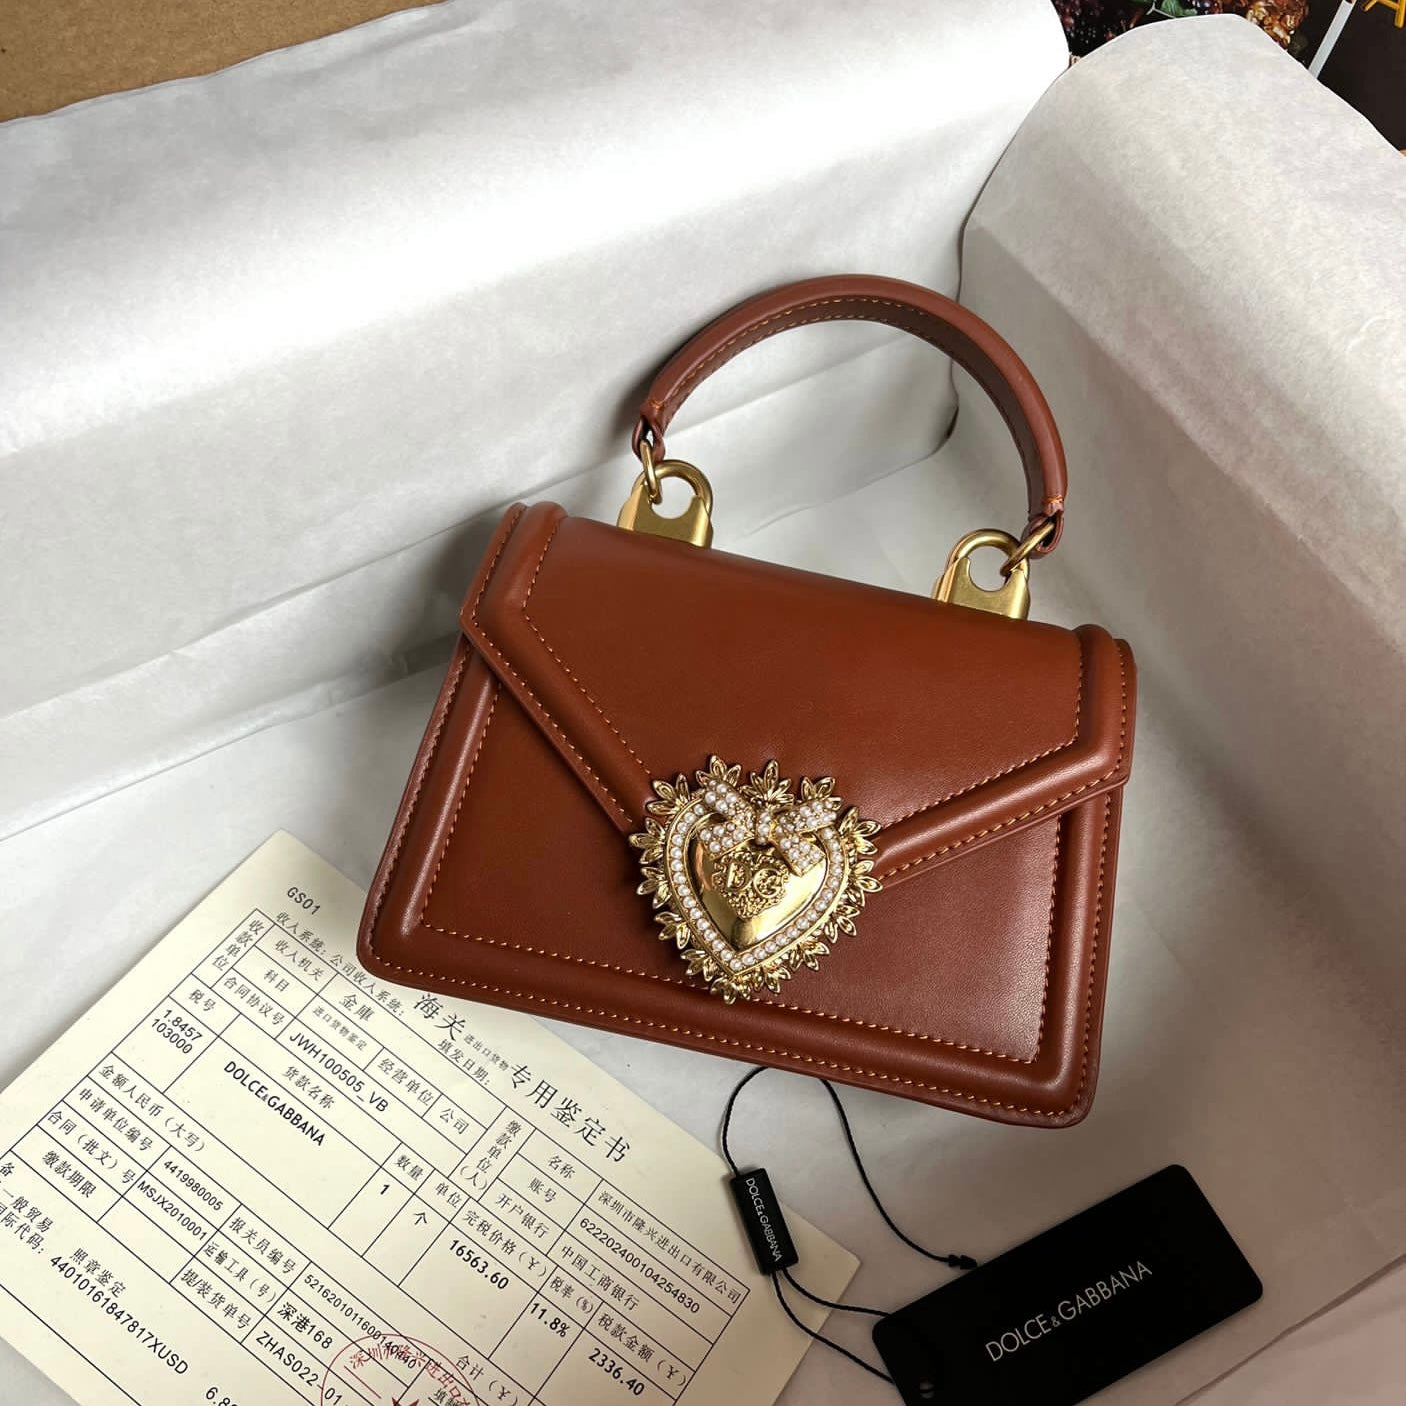 Devotion Mini Leather Shoulder Bag in Silver - Dolce Gabbana